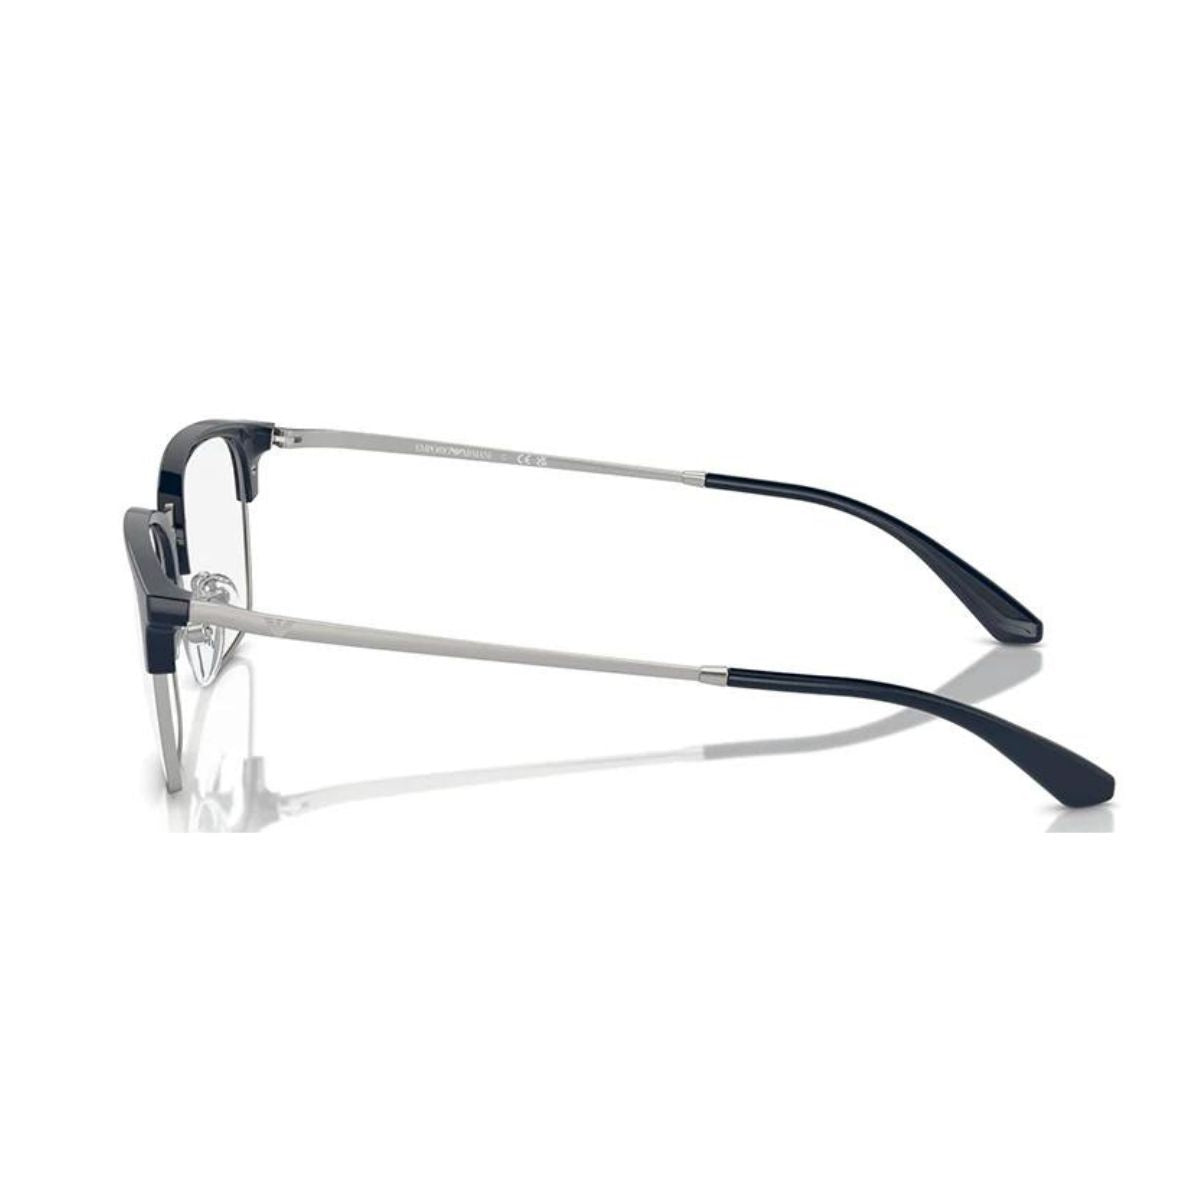 "Emporio Armani 3243 3045 Eye Sight Glasses Frame For Men's At Optorium"